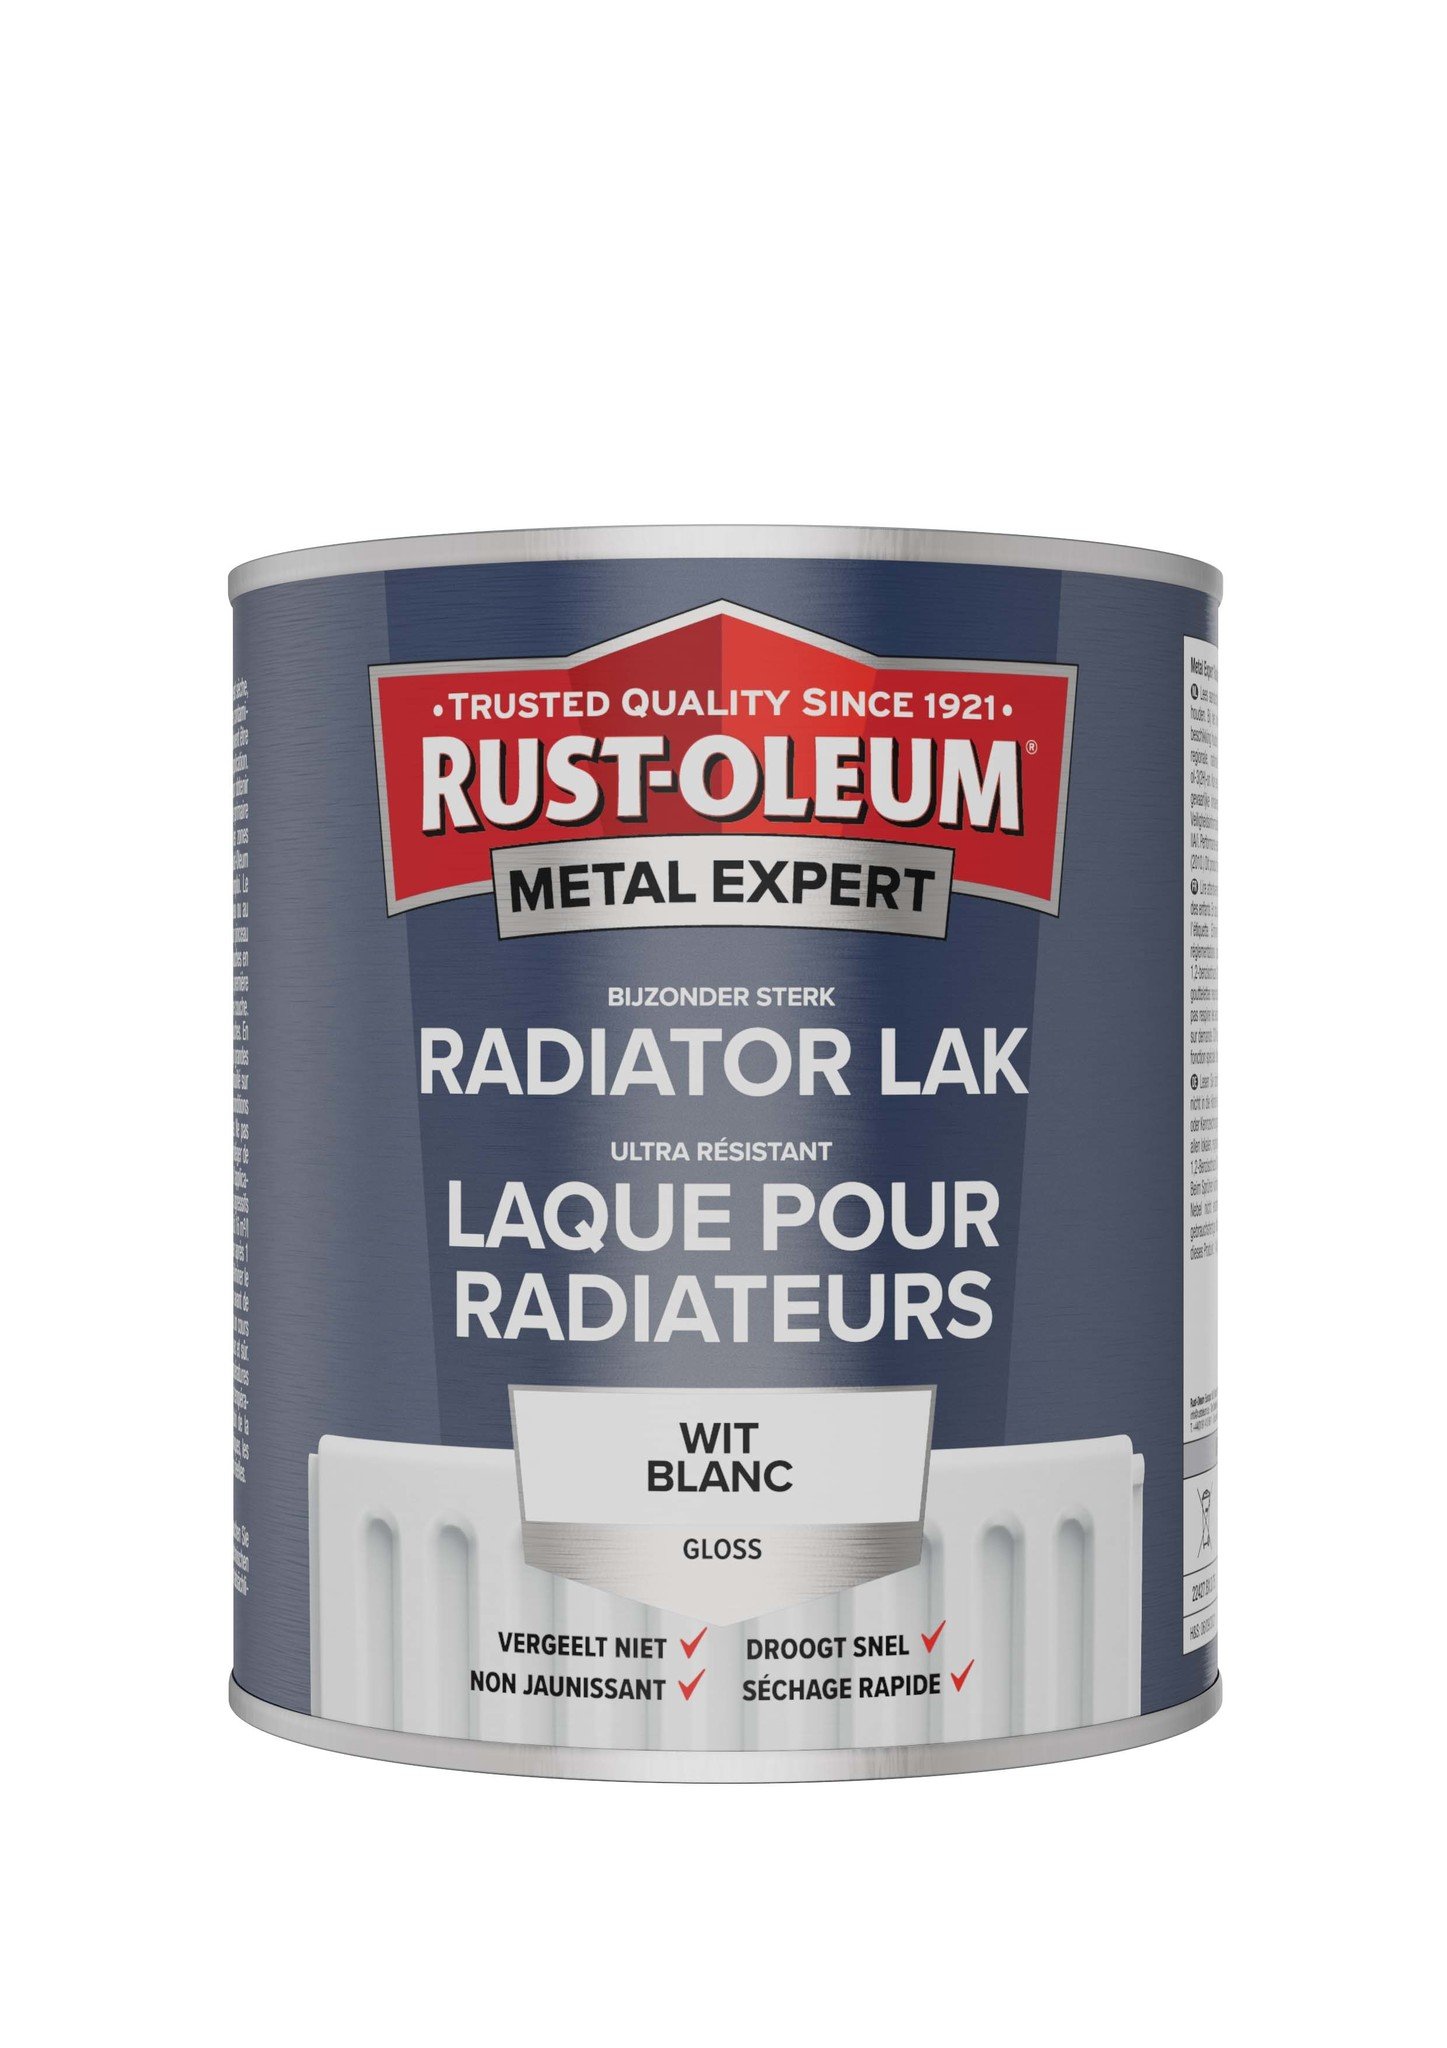 rust-oleum metal expert radiator lak gloss wit 0.75 ltr